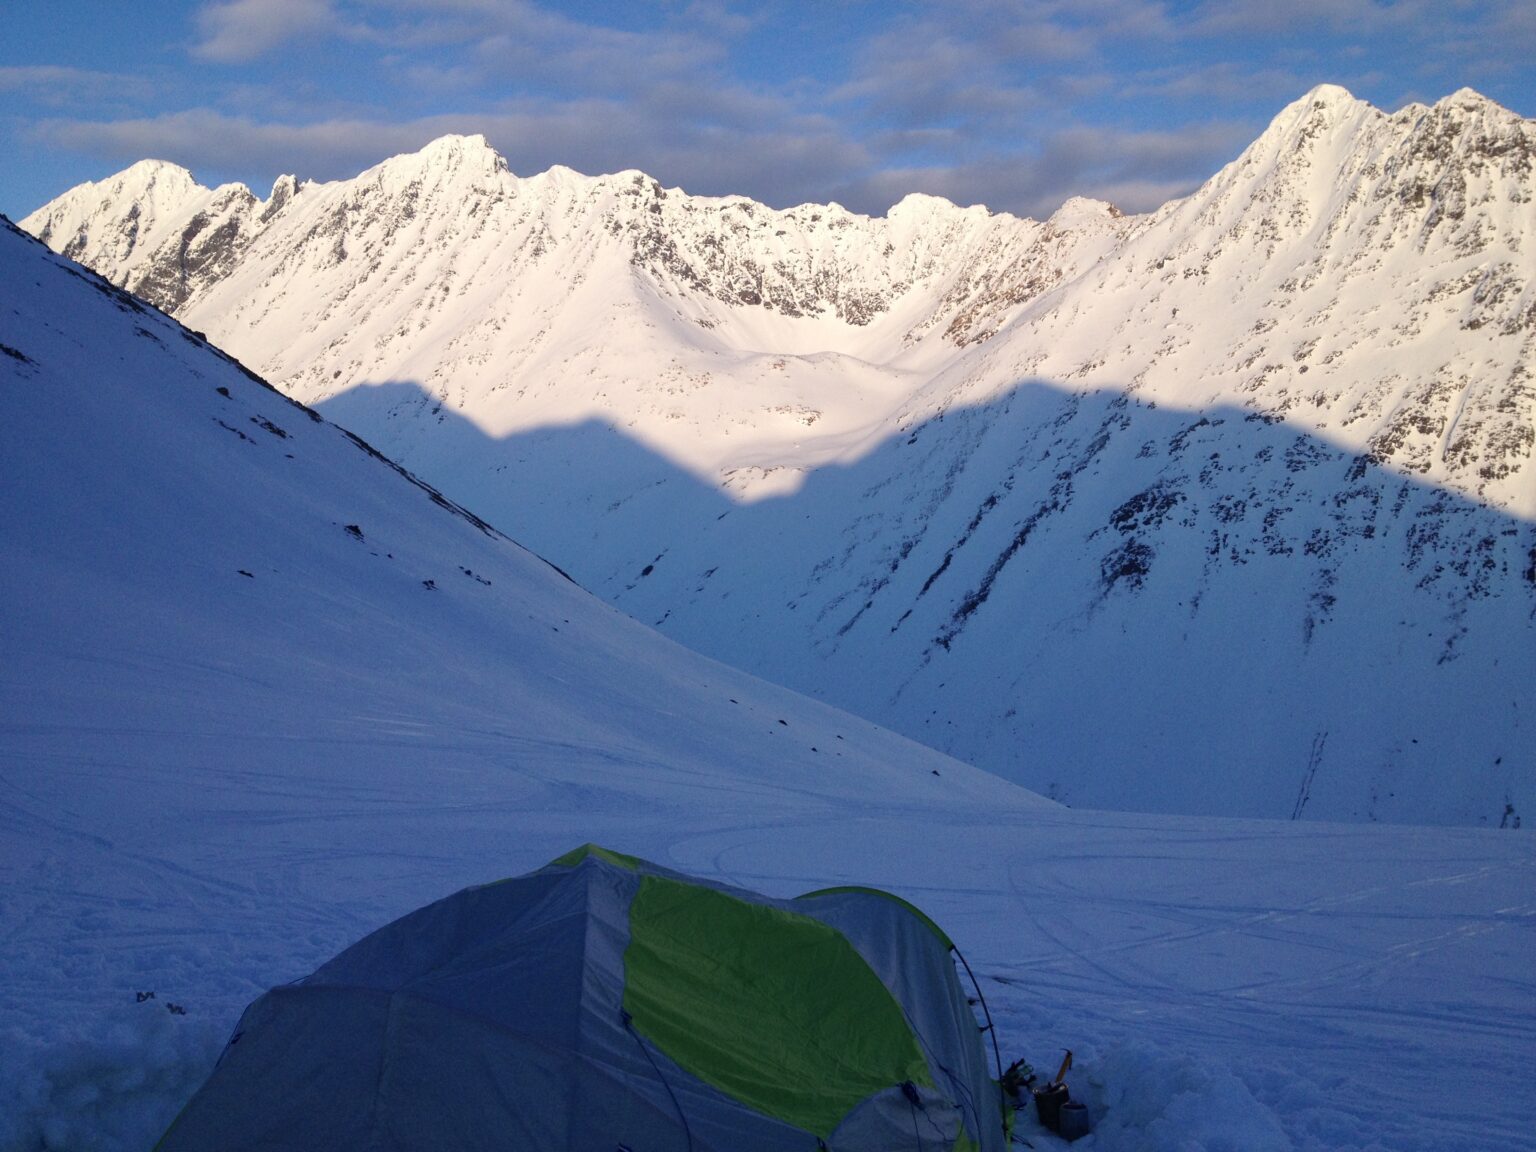 Stunning camping Spot in the Lyngen Alps